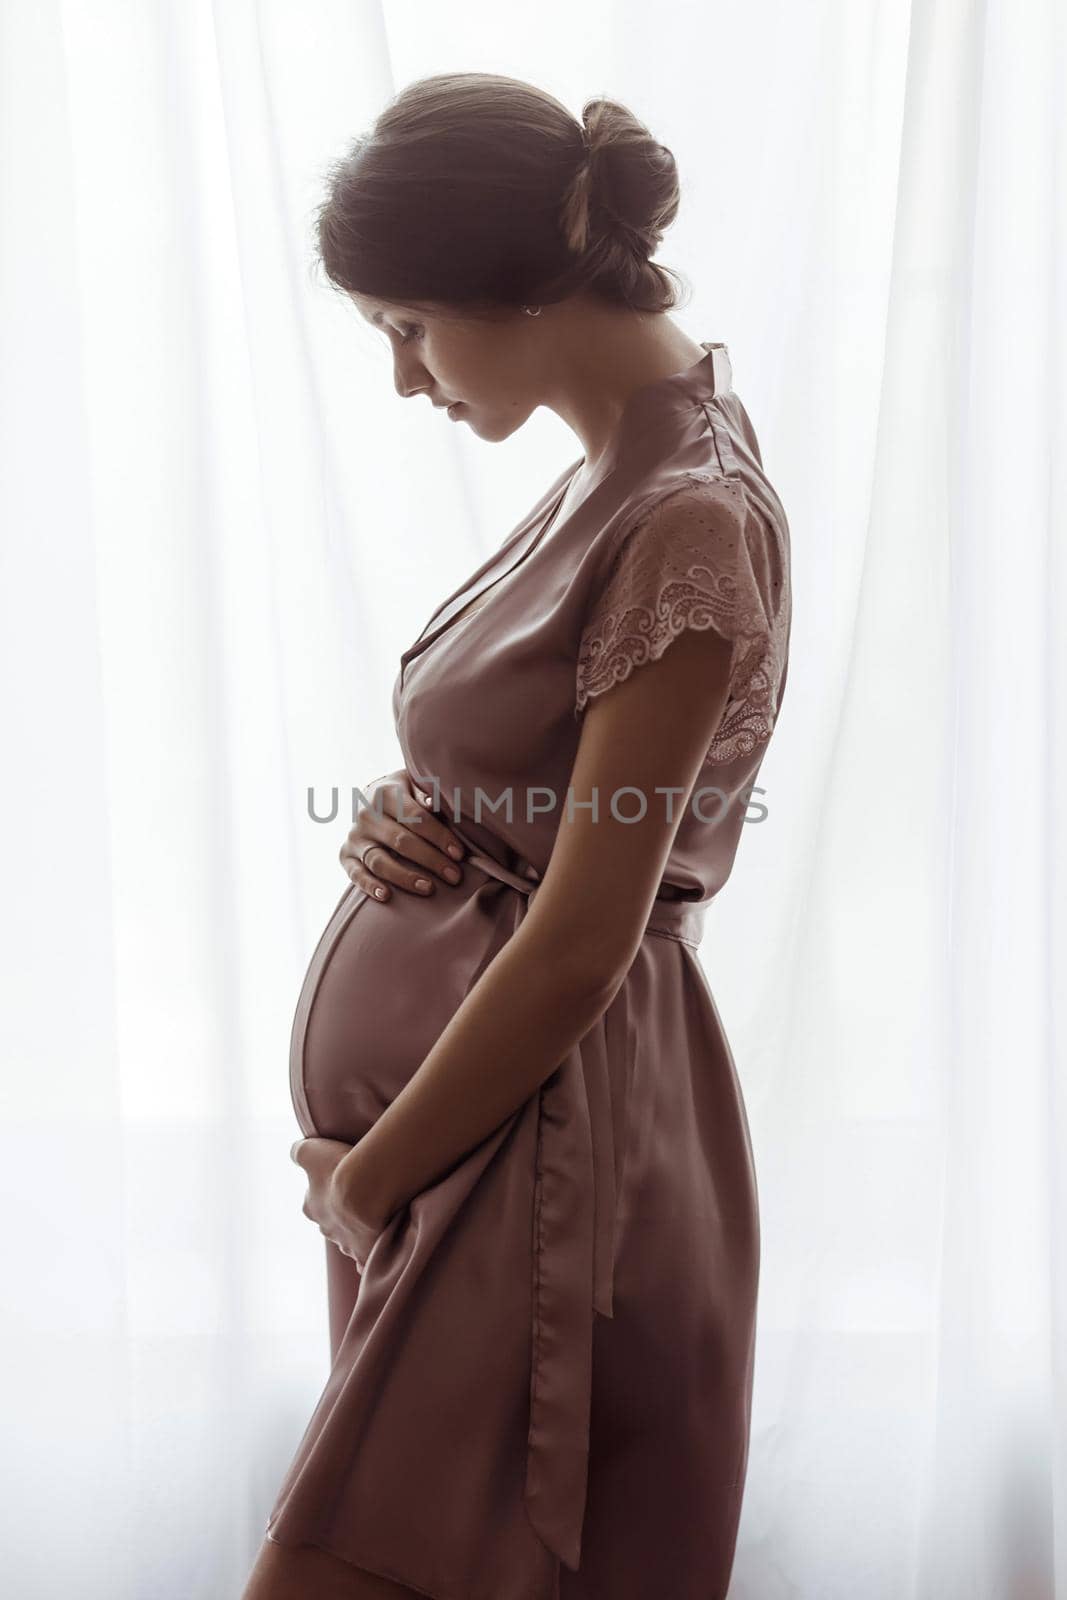 Silhouette of pregnant woman, window by Demkat